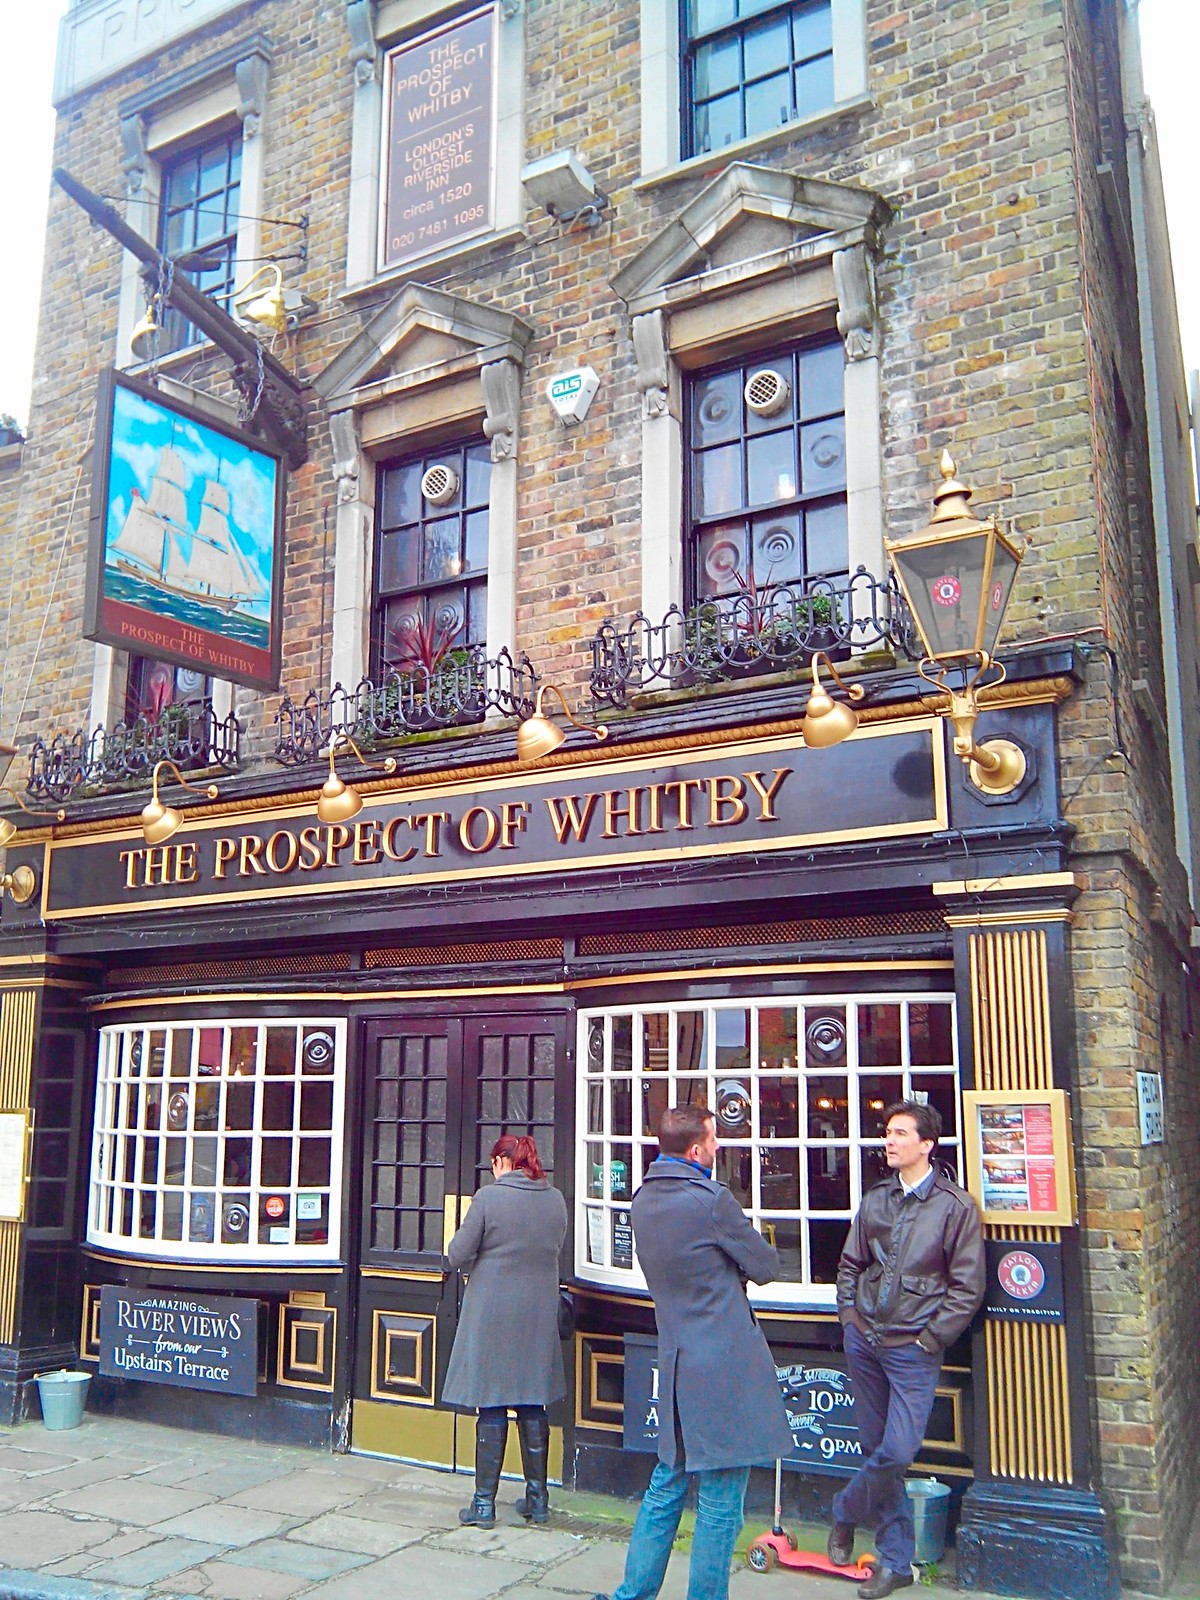 Historic London pub on the Thames